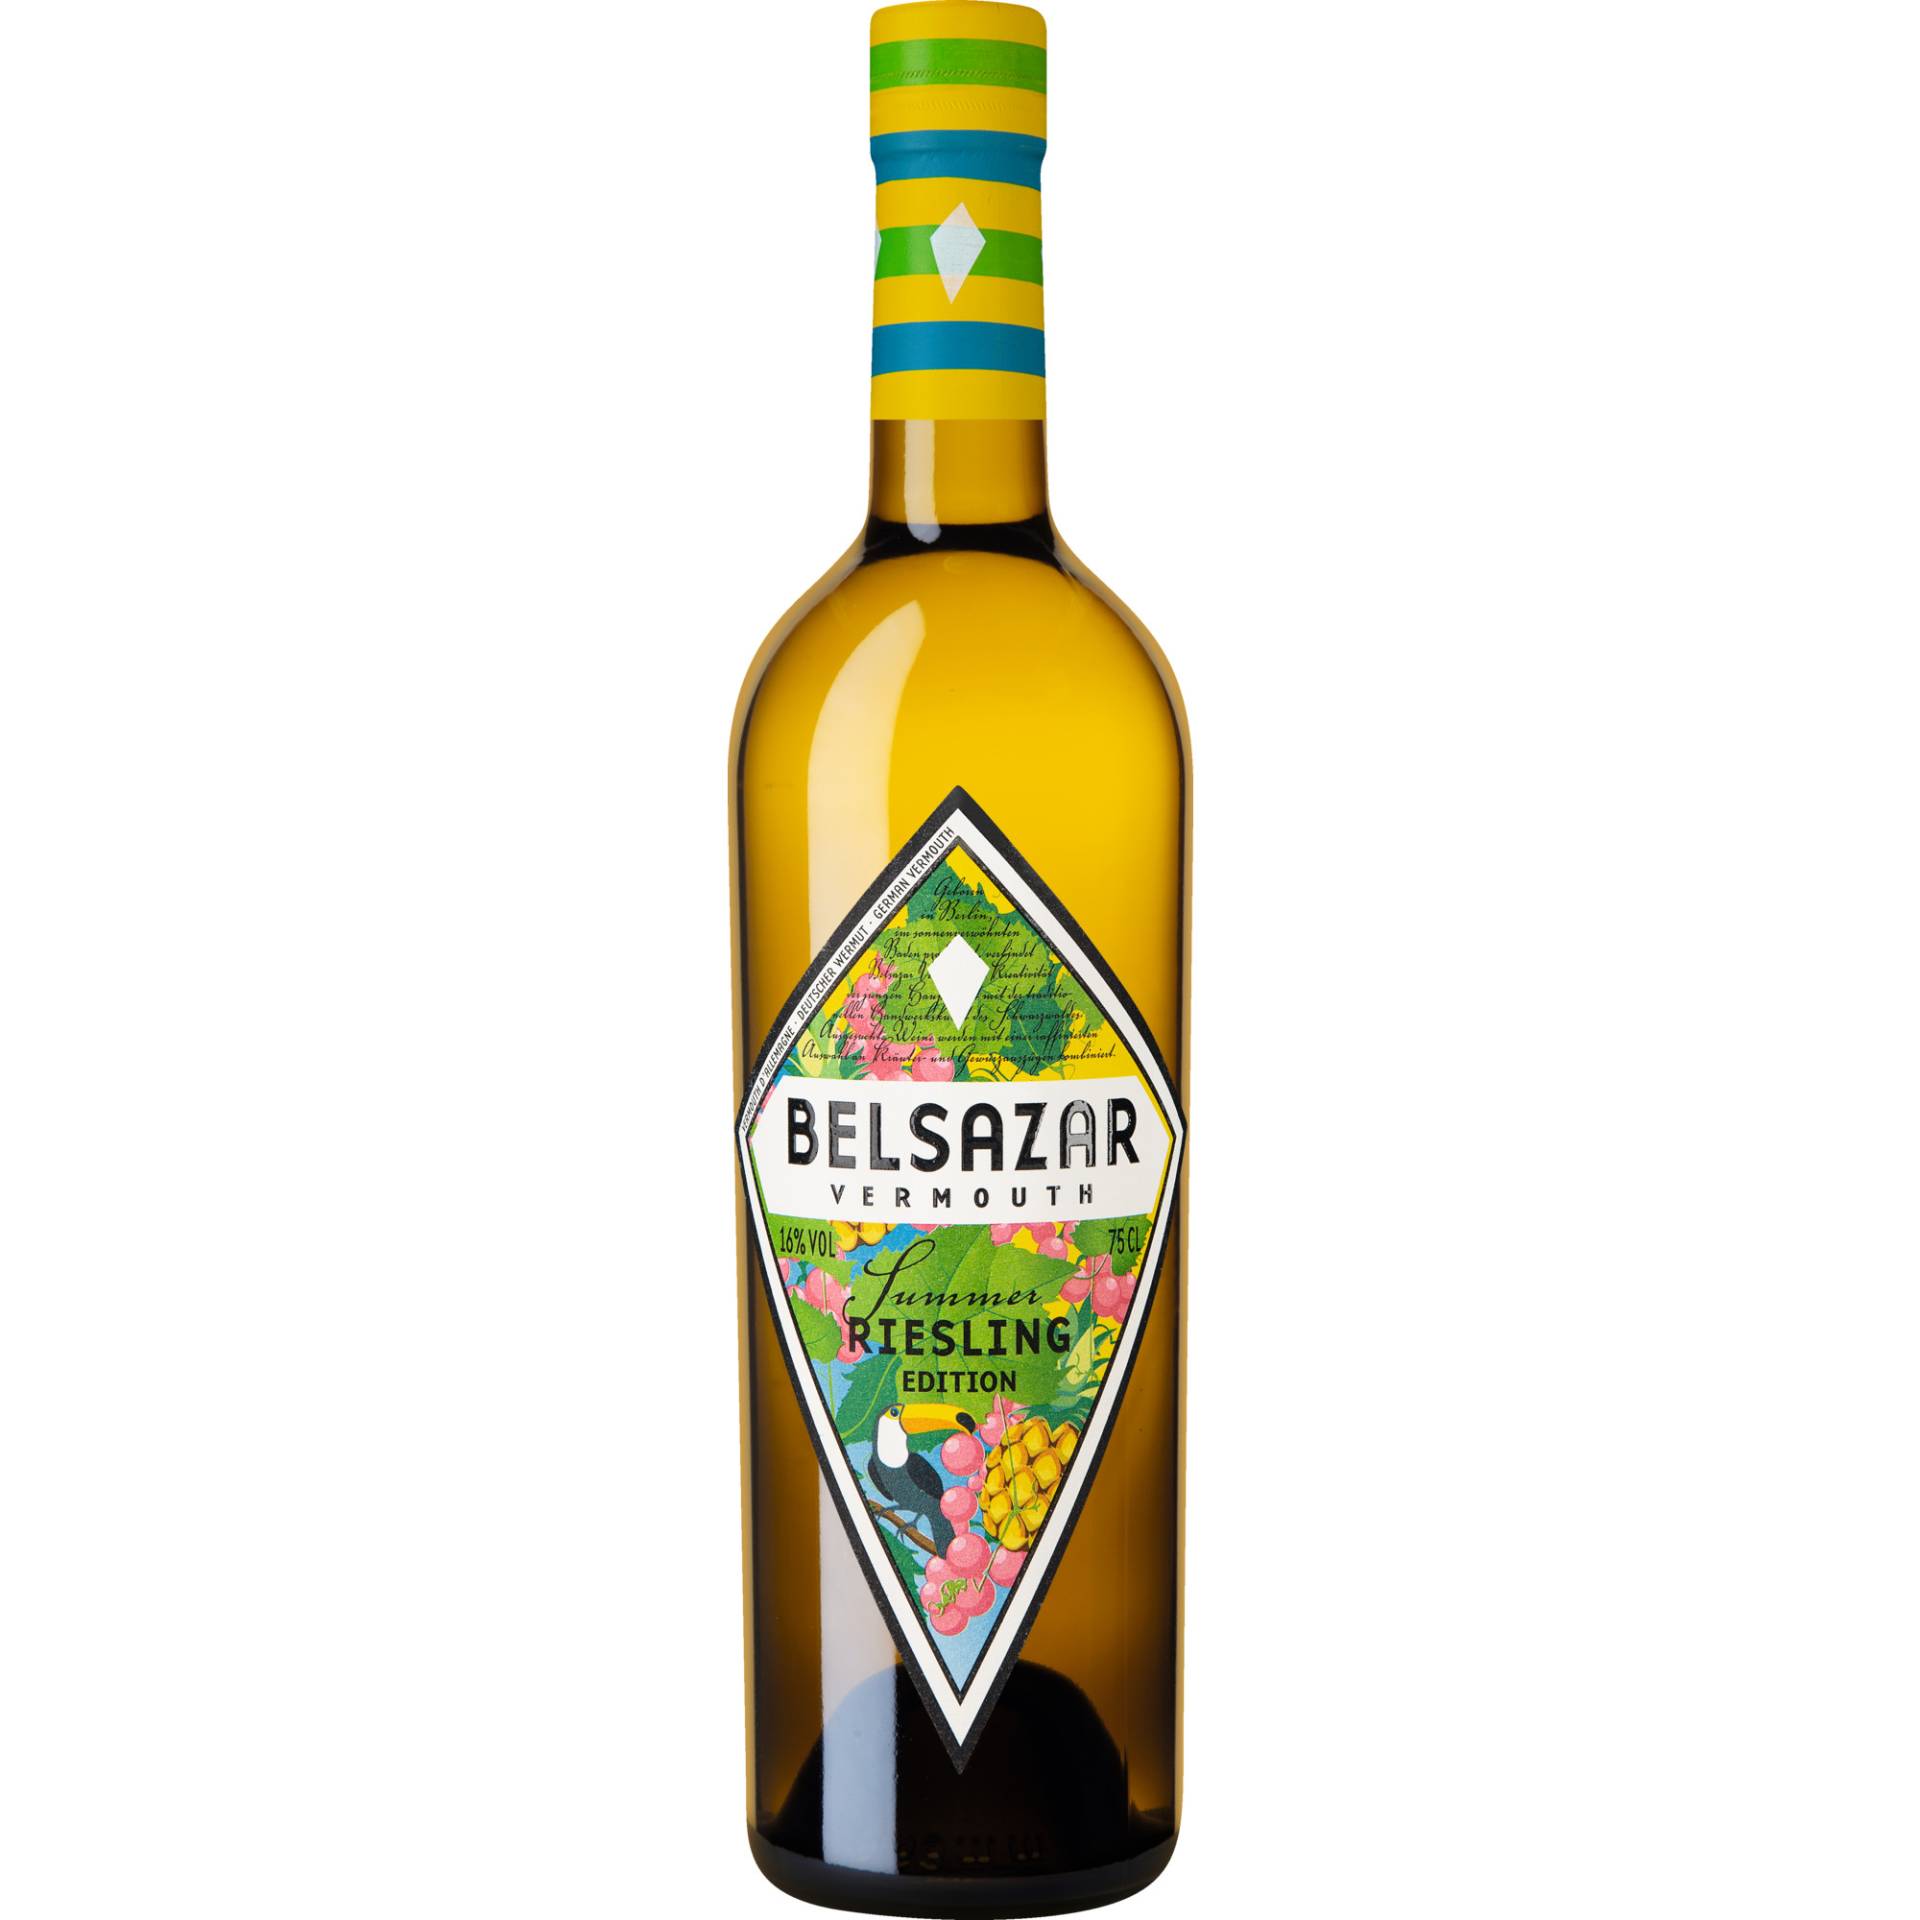 Belsazar Dr. Loosen Riesling Vermouth, 0,75 L, 16% Vol., Spirituosen von Belsazar GmbH, Potsdamer Str. 91, DE - 10785 Berlin